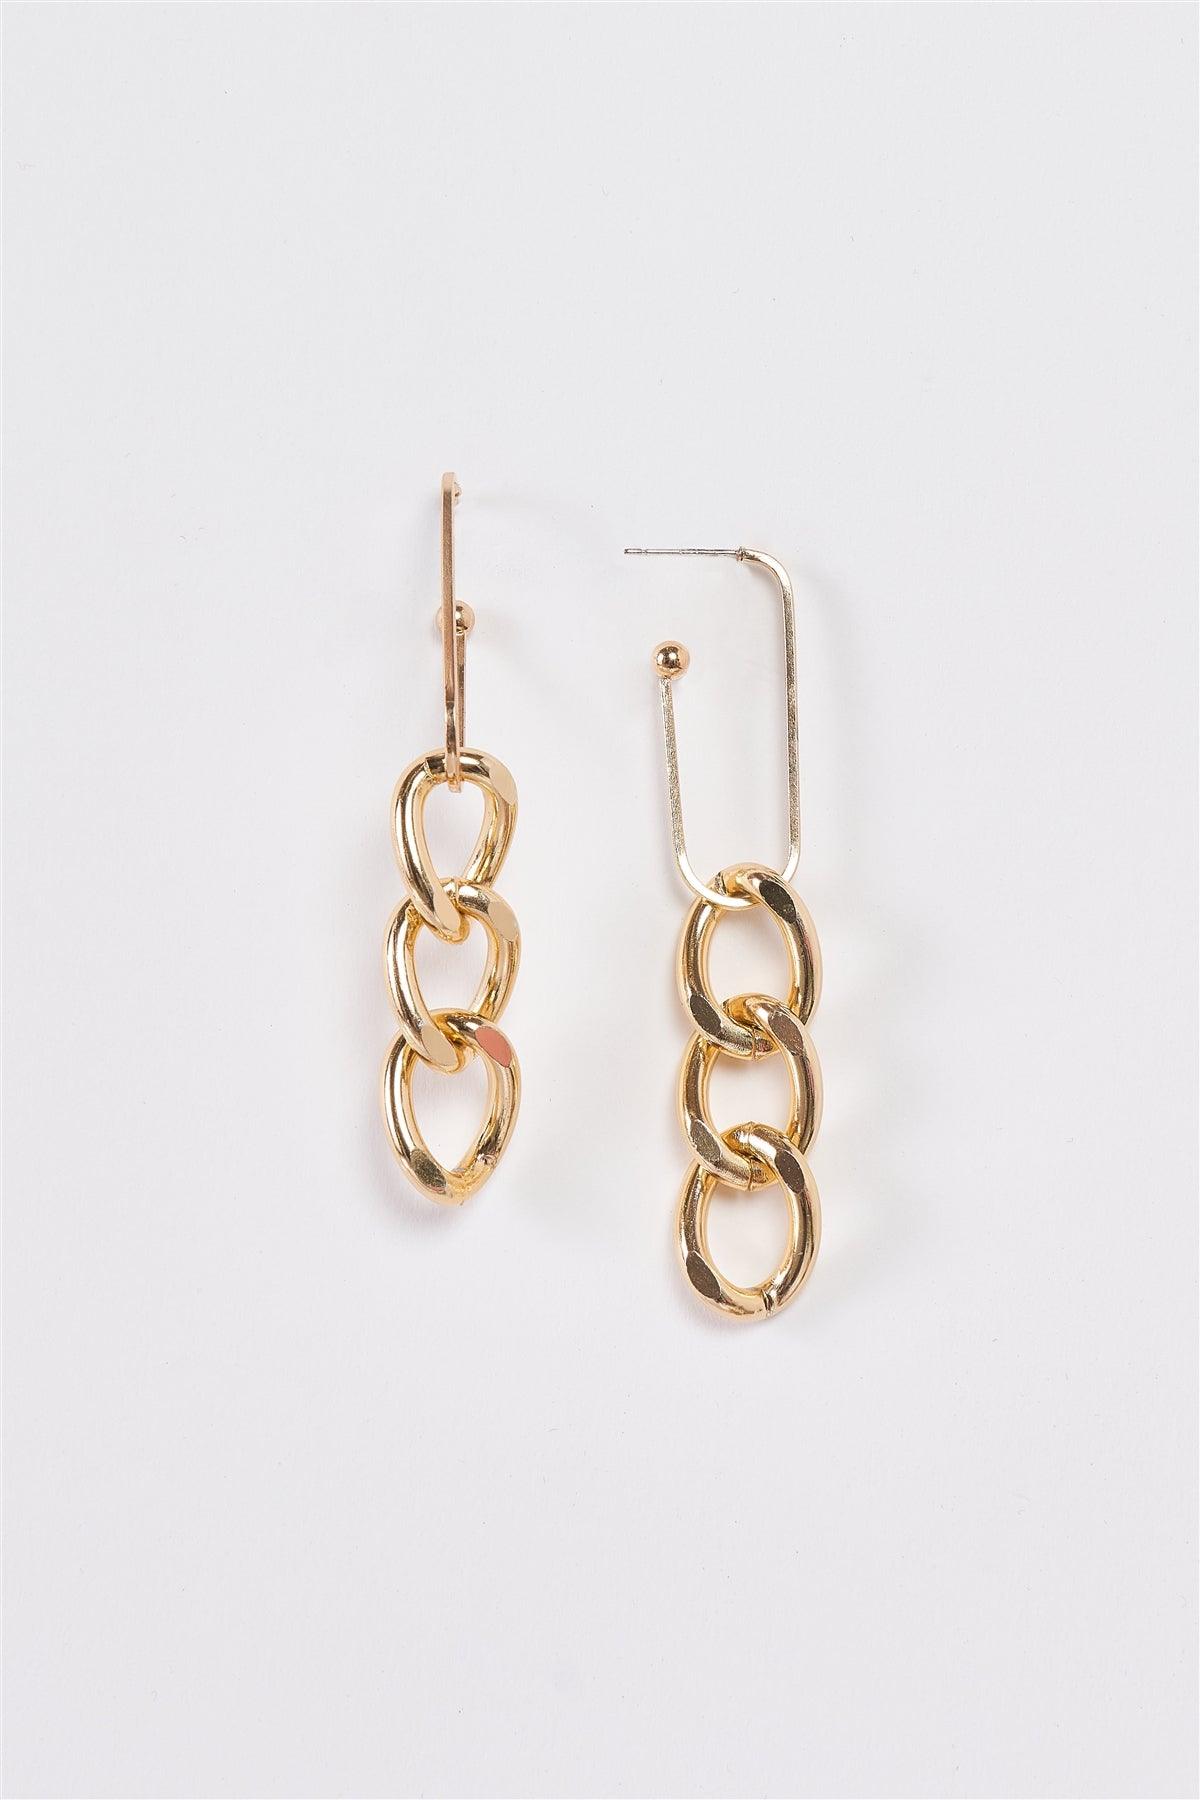 Yellow Gold Detachable Open Geometric Hoop Chain Link Dangle Earrings /3 Pairs